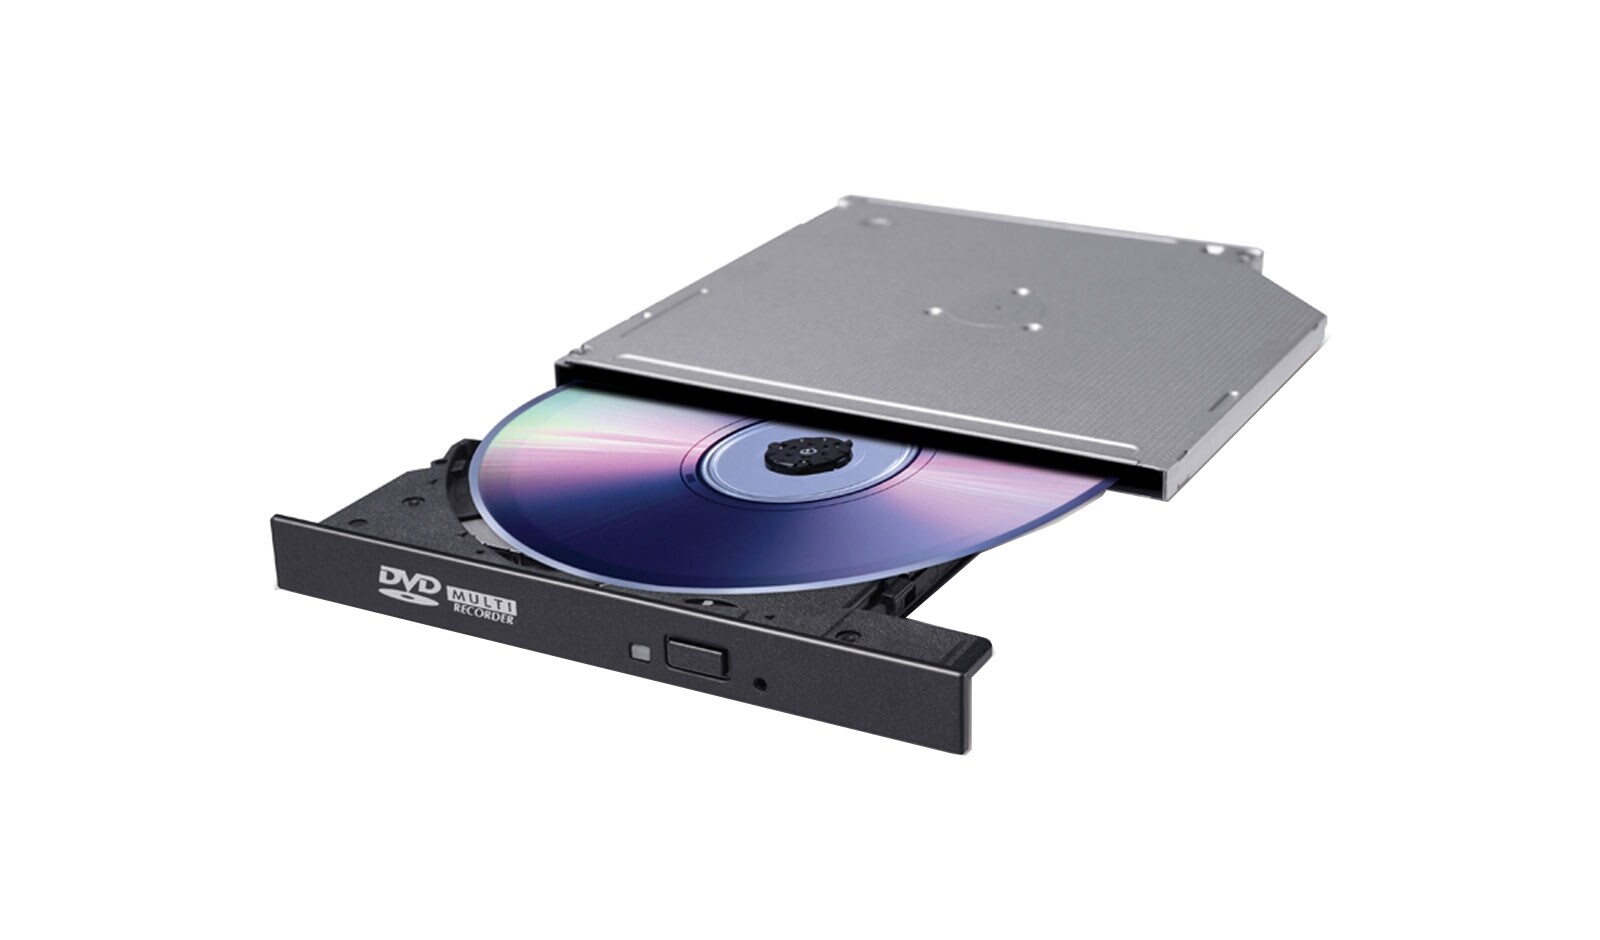 LG GTC0N Slim DVD Writer M-DISC Support Max 8X DVD±R Write Speed Silent Play